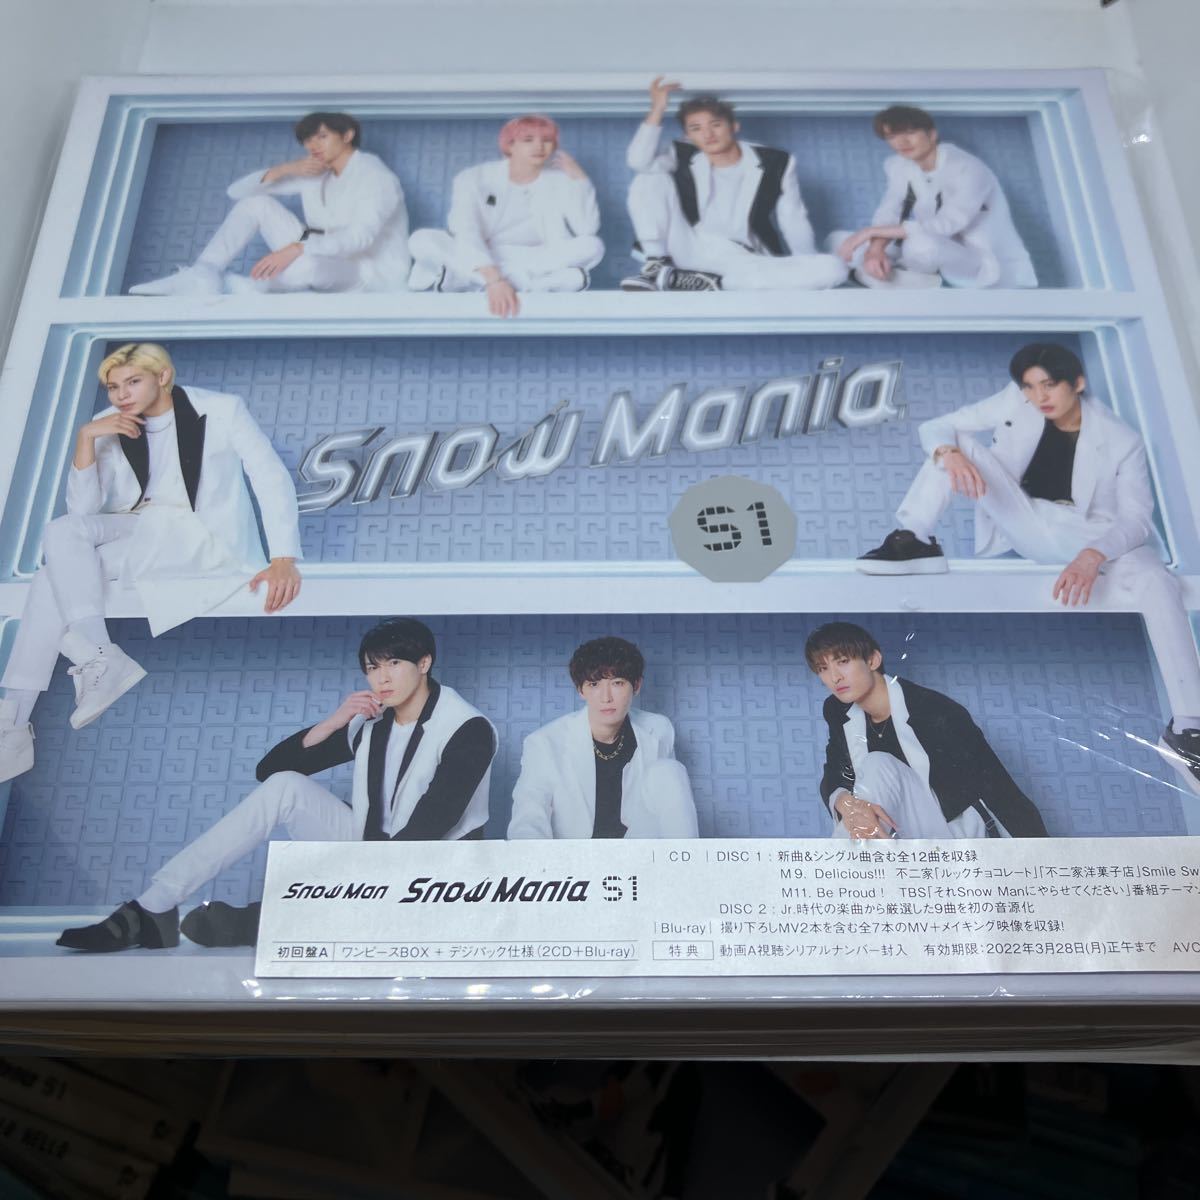 1914円 【95%OFF!】 Snow Man CD Mania S1 初回盤A Blu-ray付